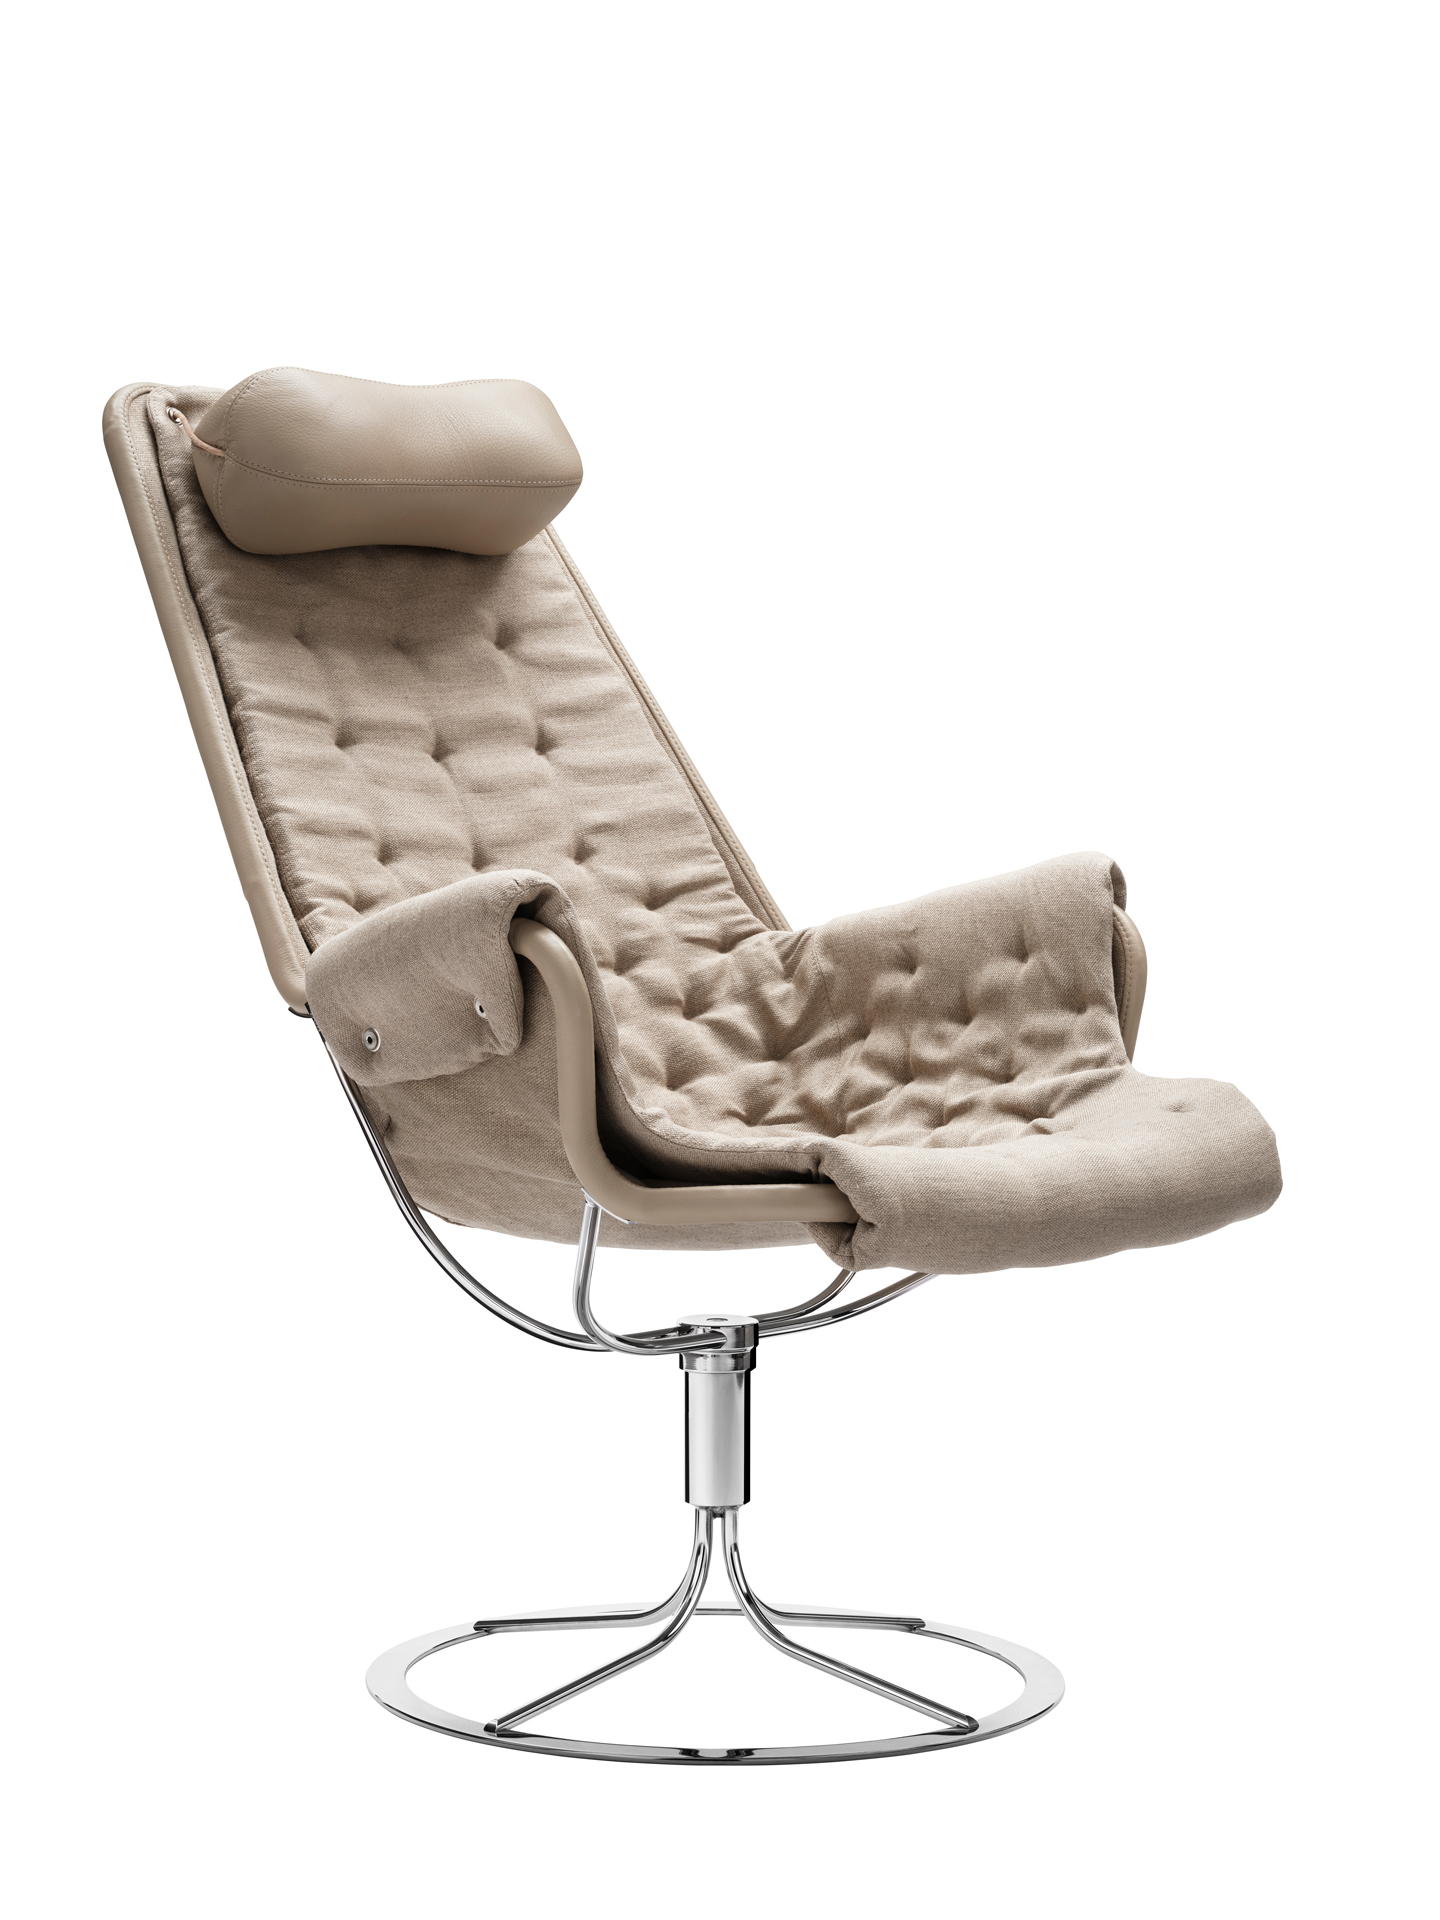 Furniture-Easy-Chair-Jetson-nordic-light-rustical-12114-PI-1.1-2.jpg